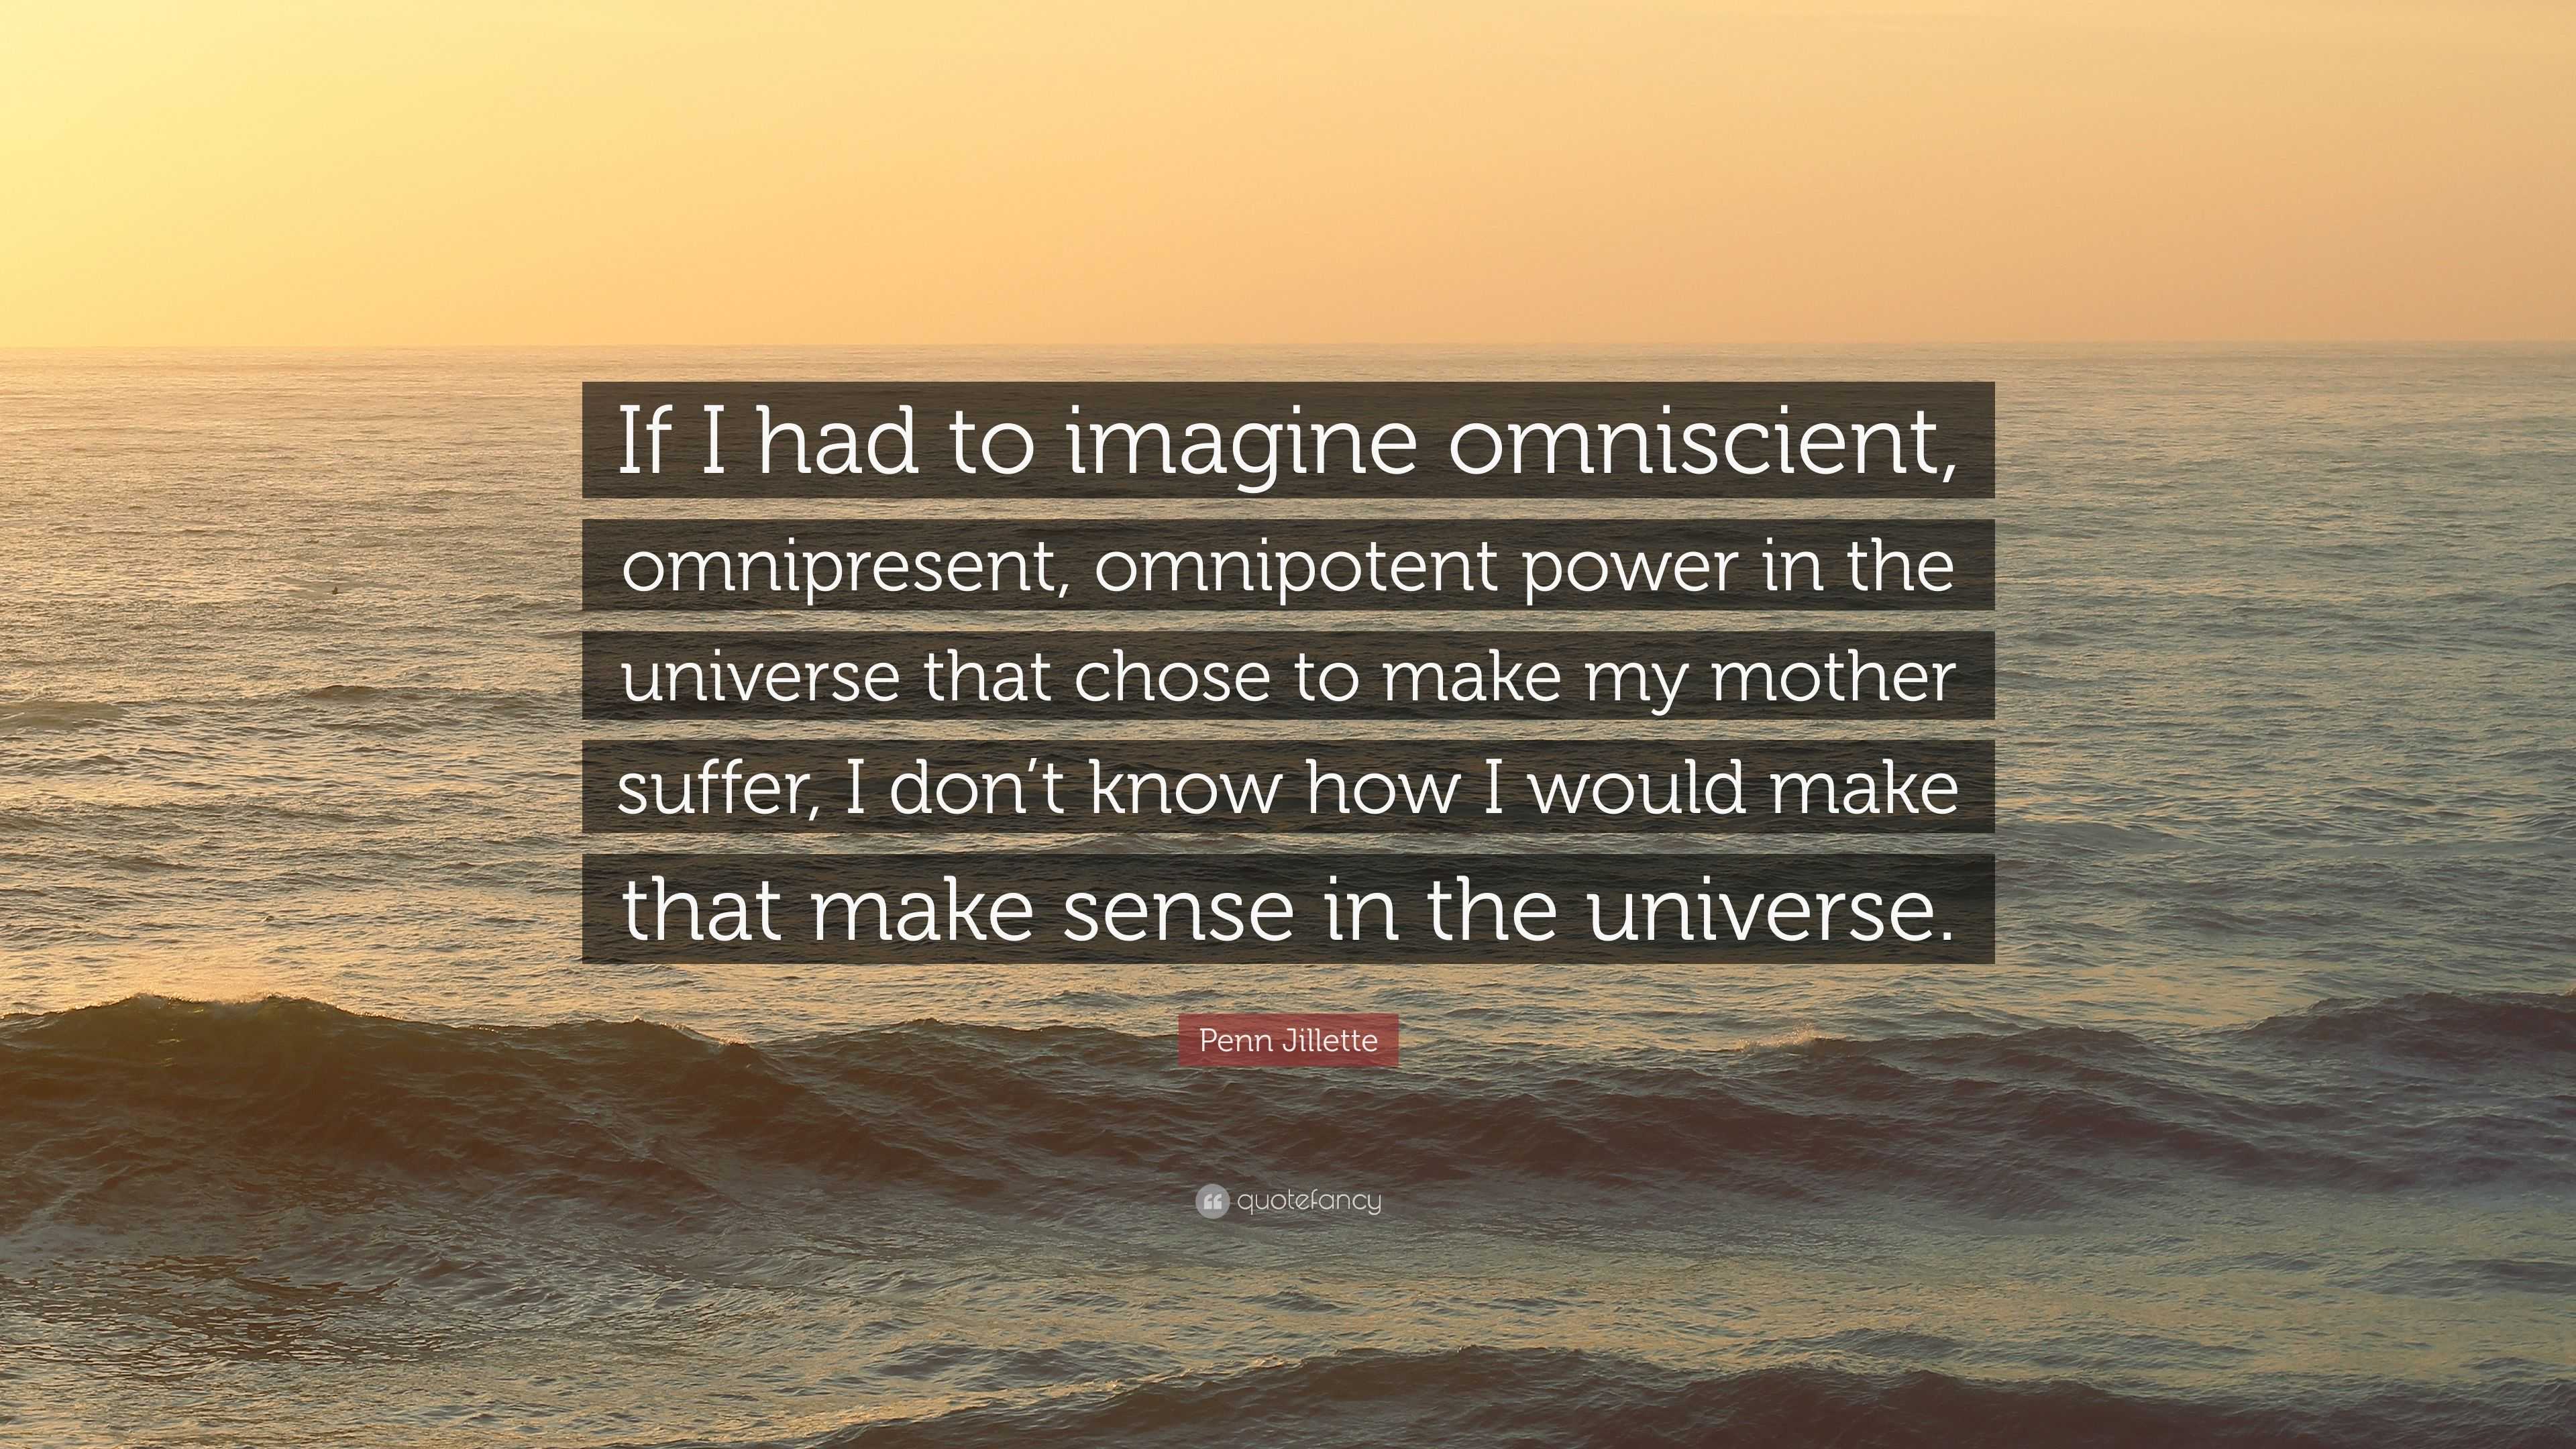 Penn Jillette Quote: “If I had to imagine omniscient, omnipresent ...